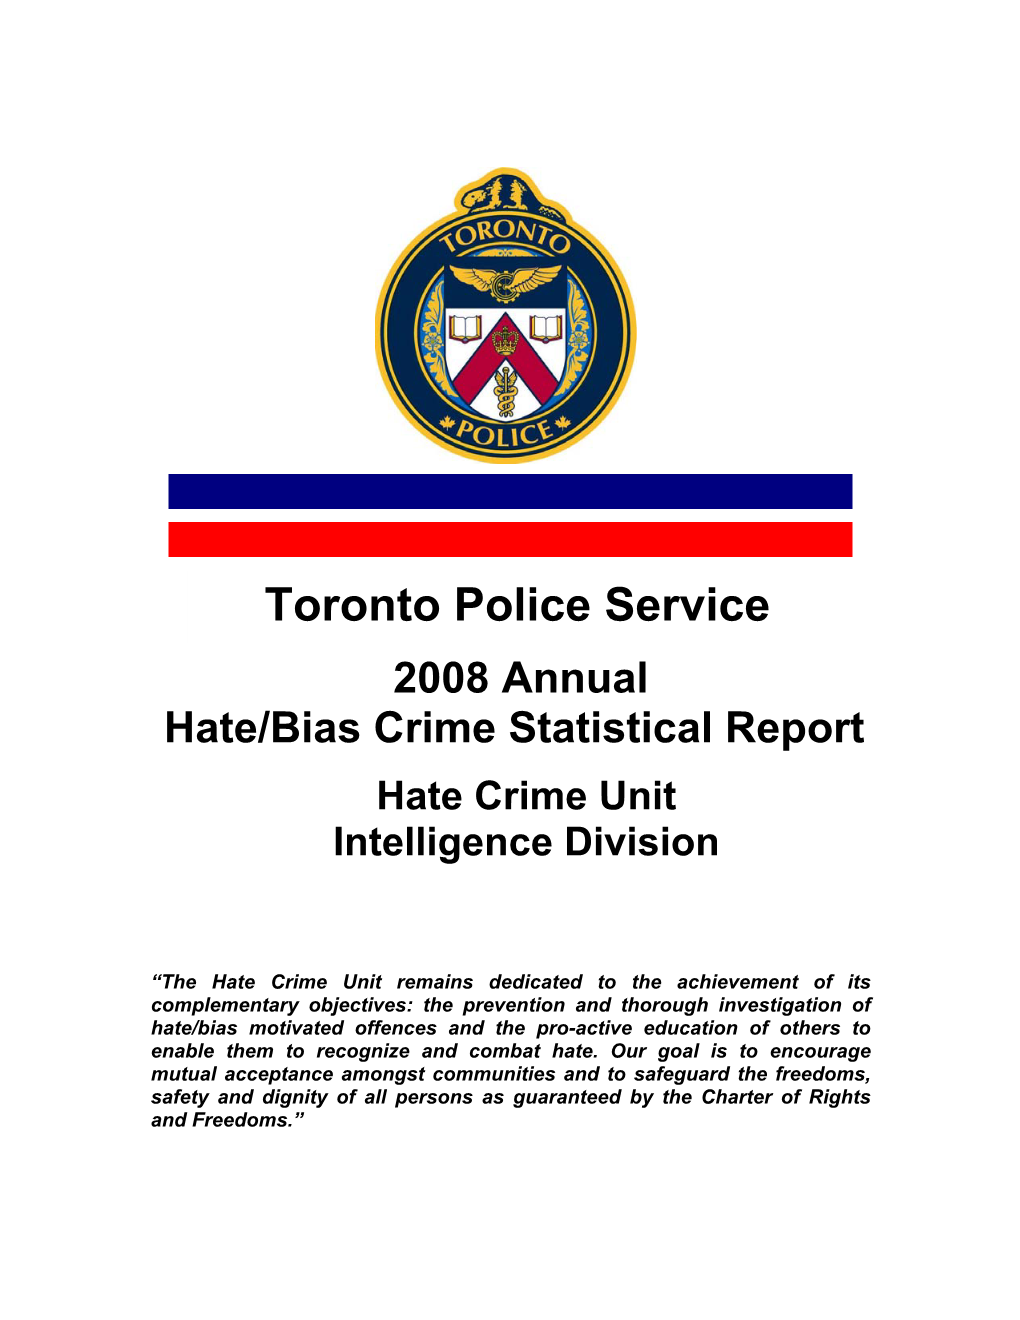 2008 Annual Hate/Bias Crime Statistical Report